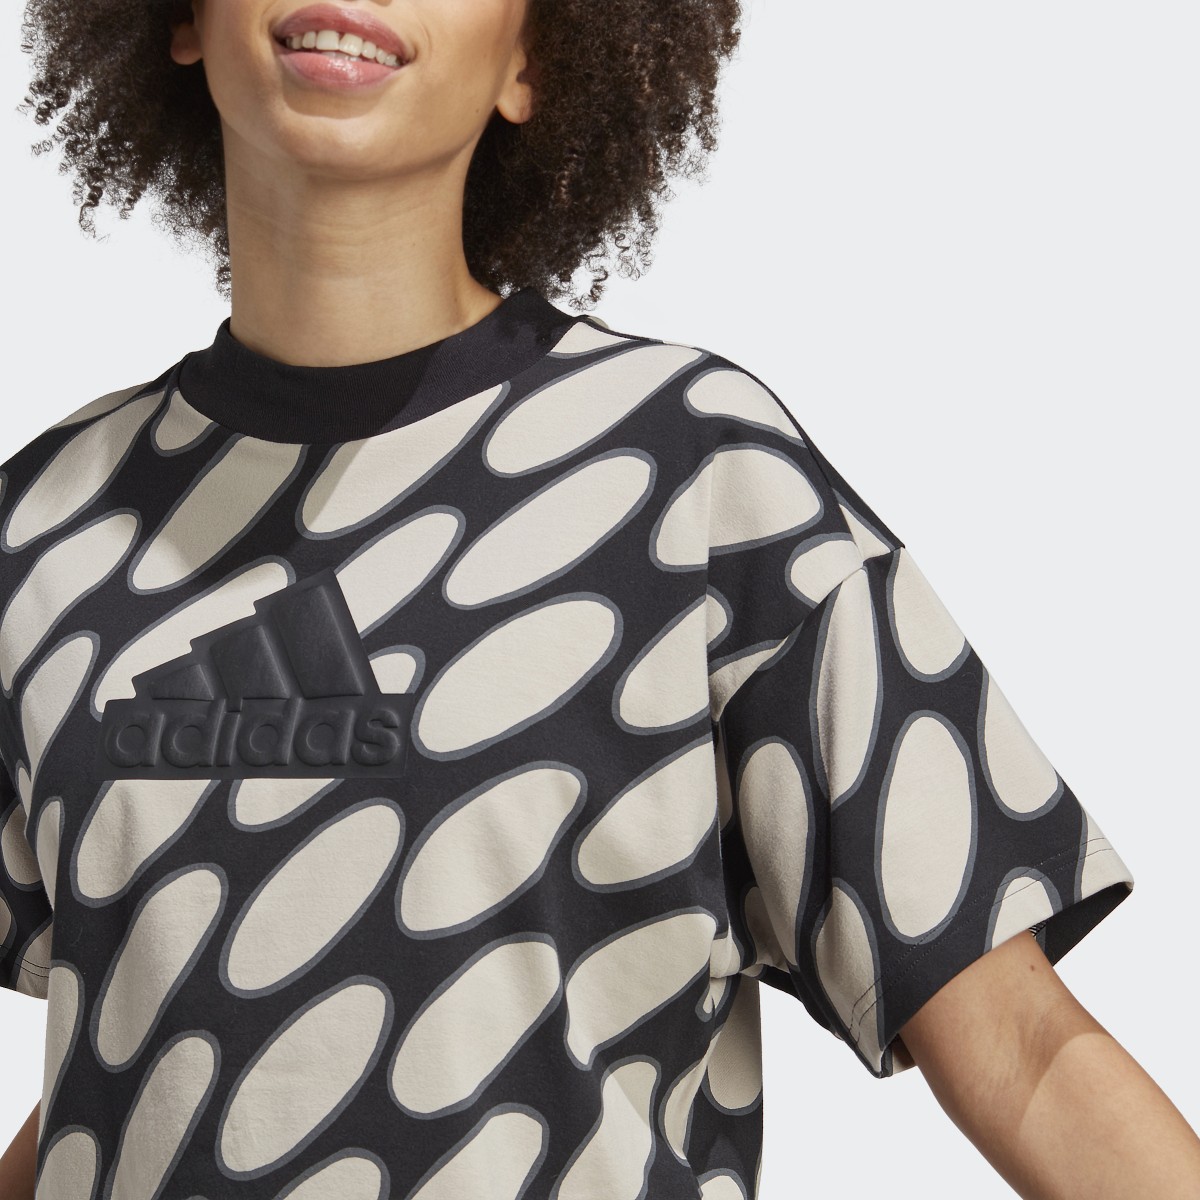 Adidas T-shirt à 3 bandes Marimekko Future Icons. 7